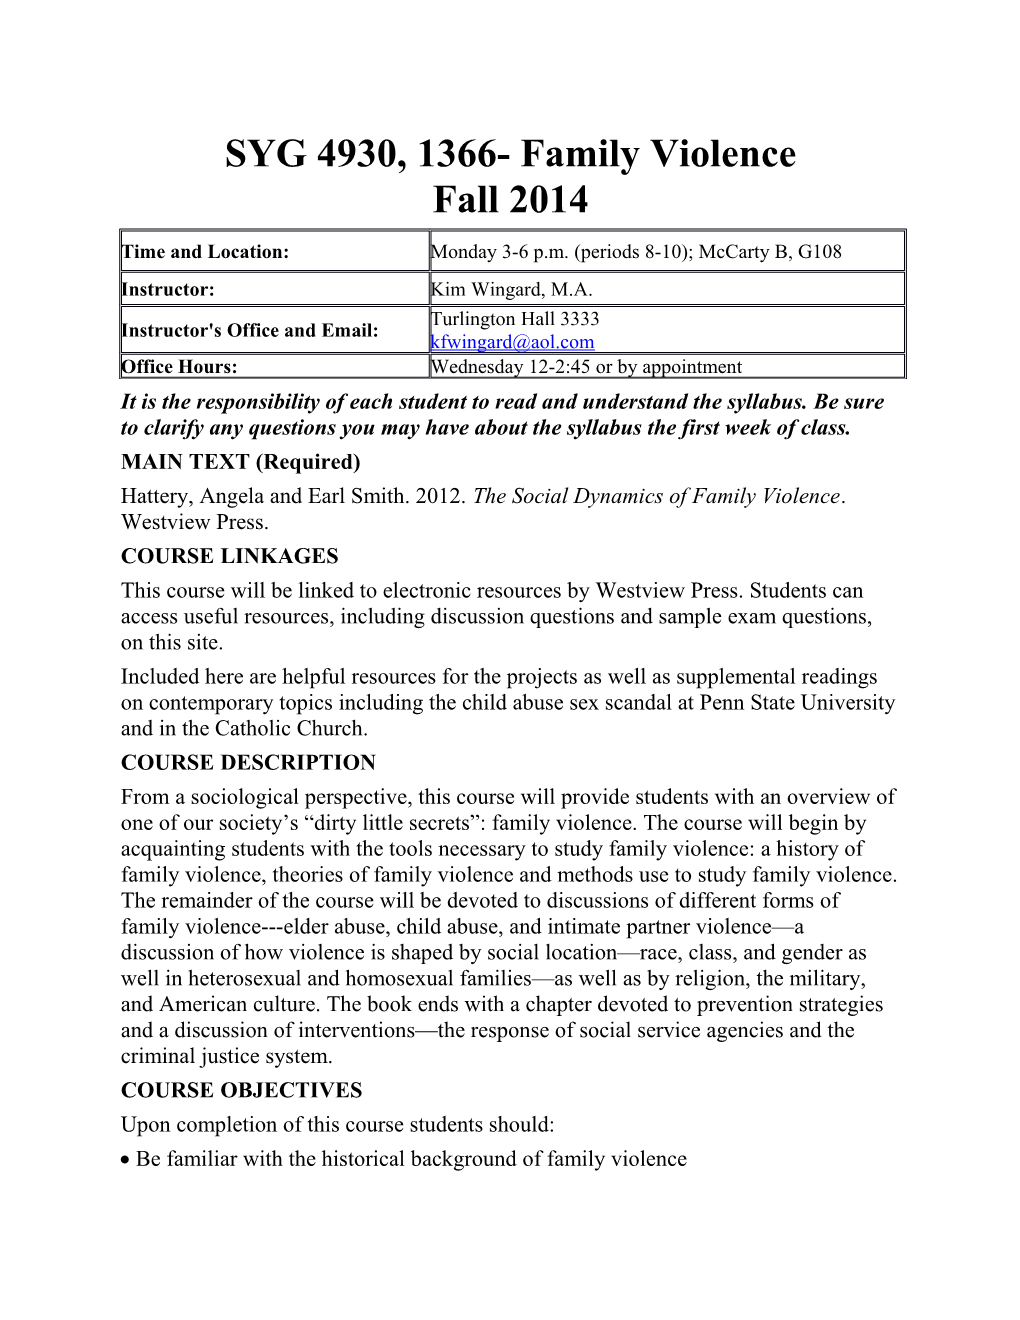 SYG 4930, 1366- Family Violence Fall 2014